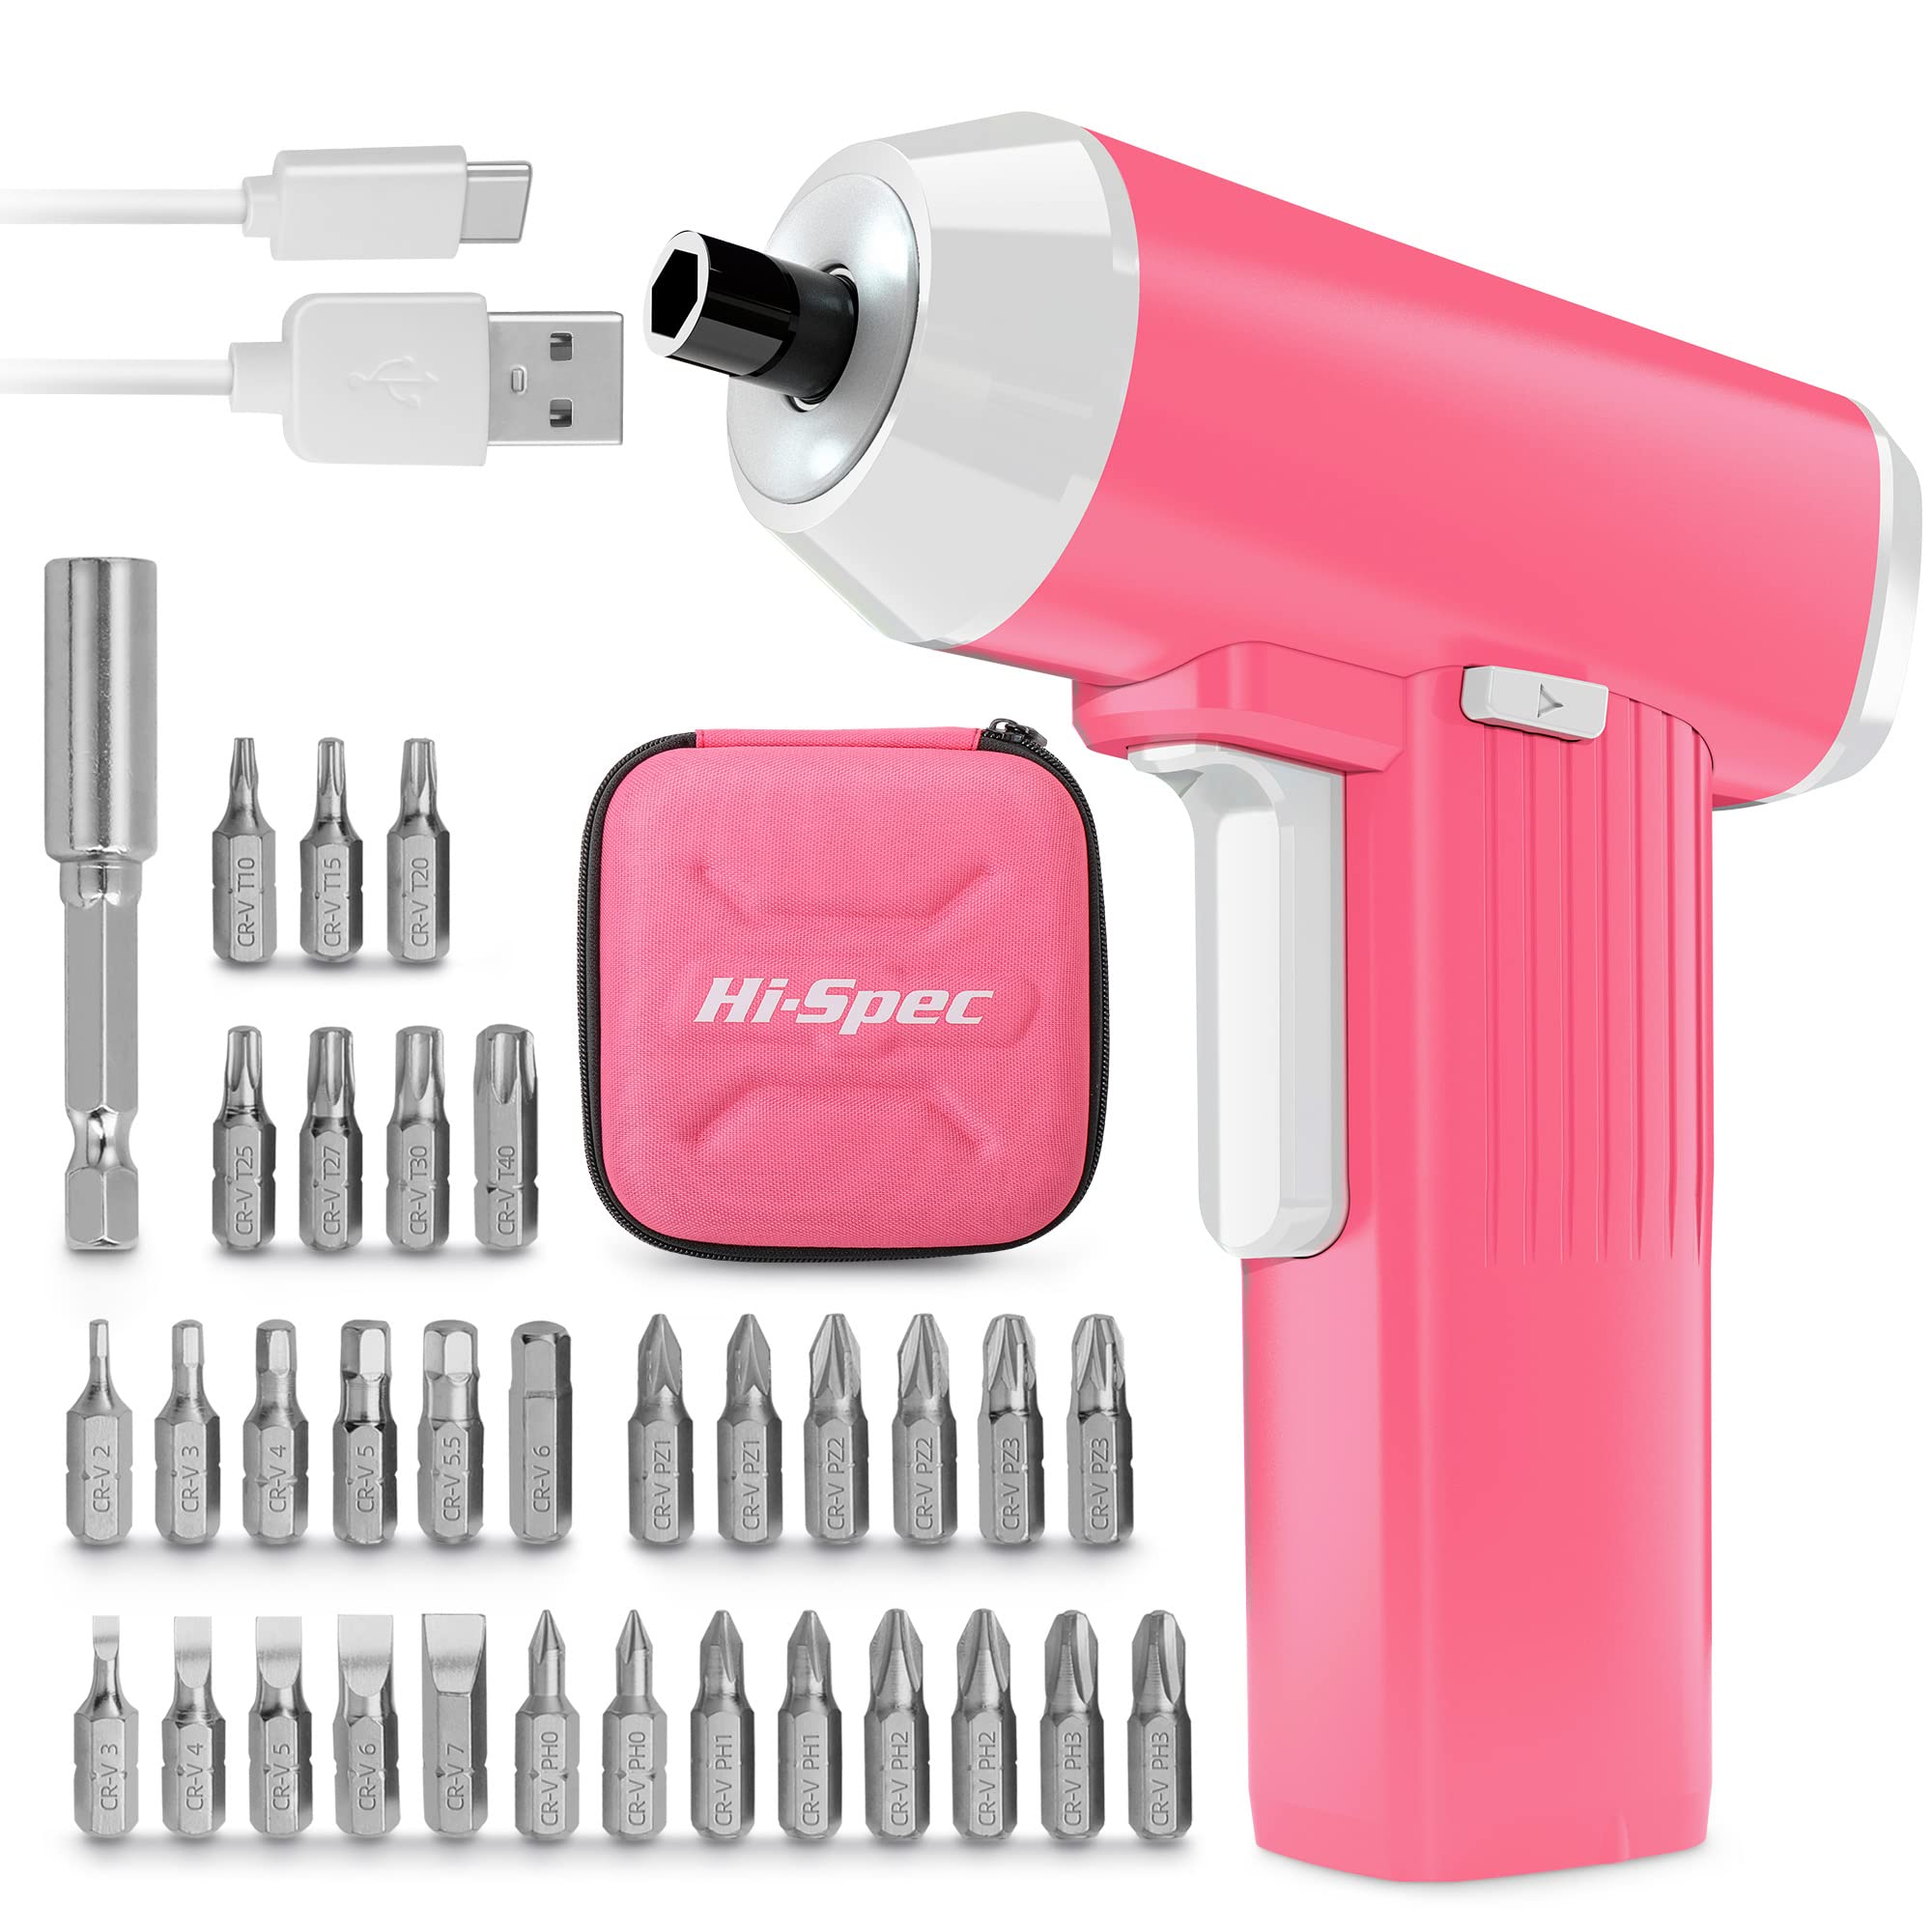 Hi-Spec 88pc Pink Home DIY Tool Kit Bundle with 3.6V Small USB Power Electric Screwdriver Set